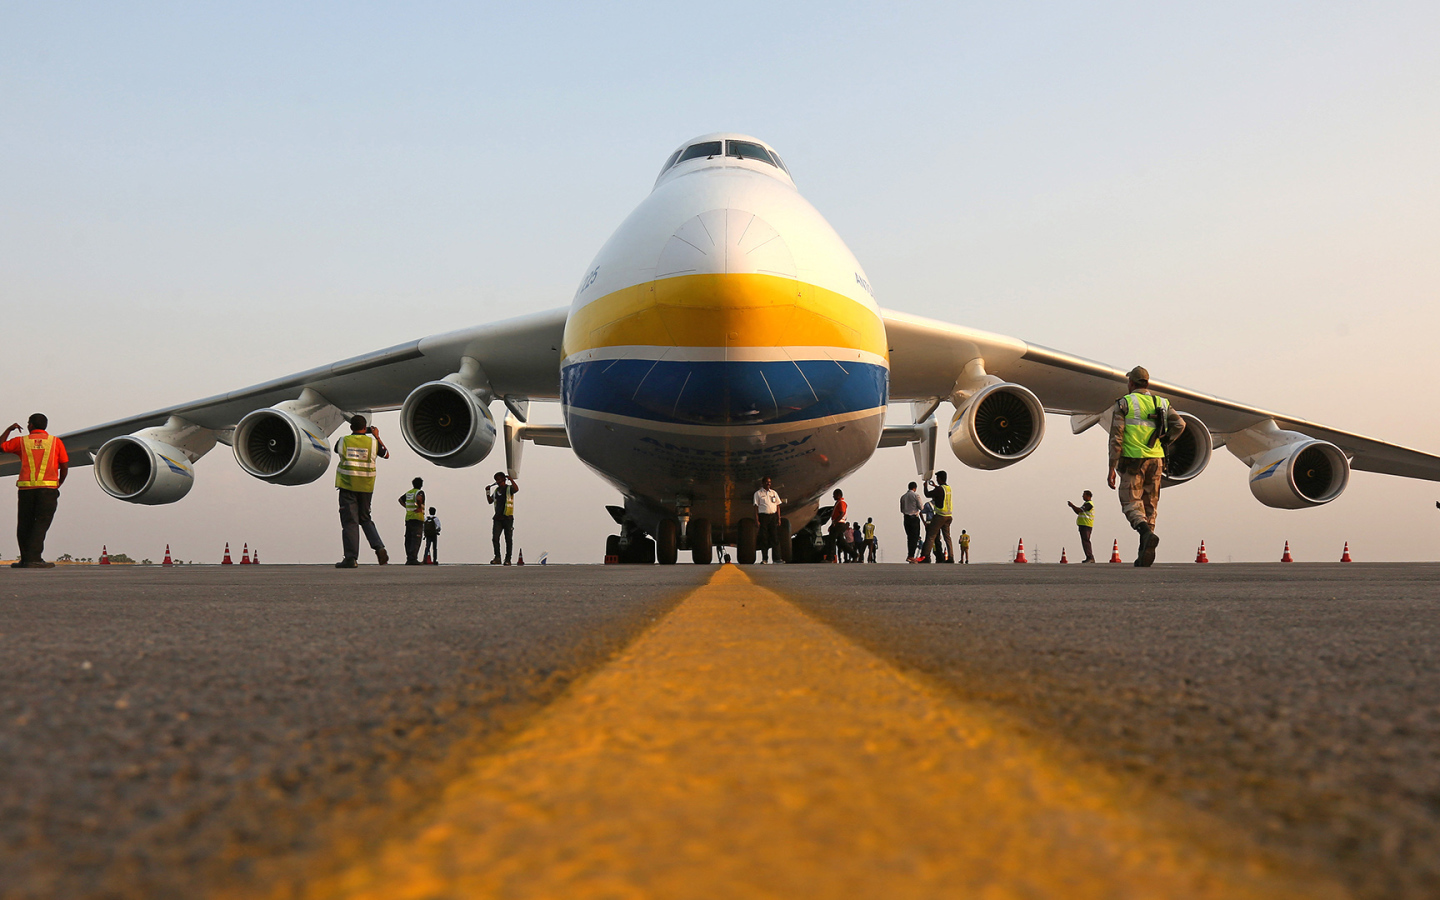 Check the transport aircraft AN - 225 Mriya before takeoff